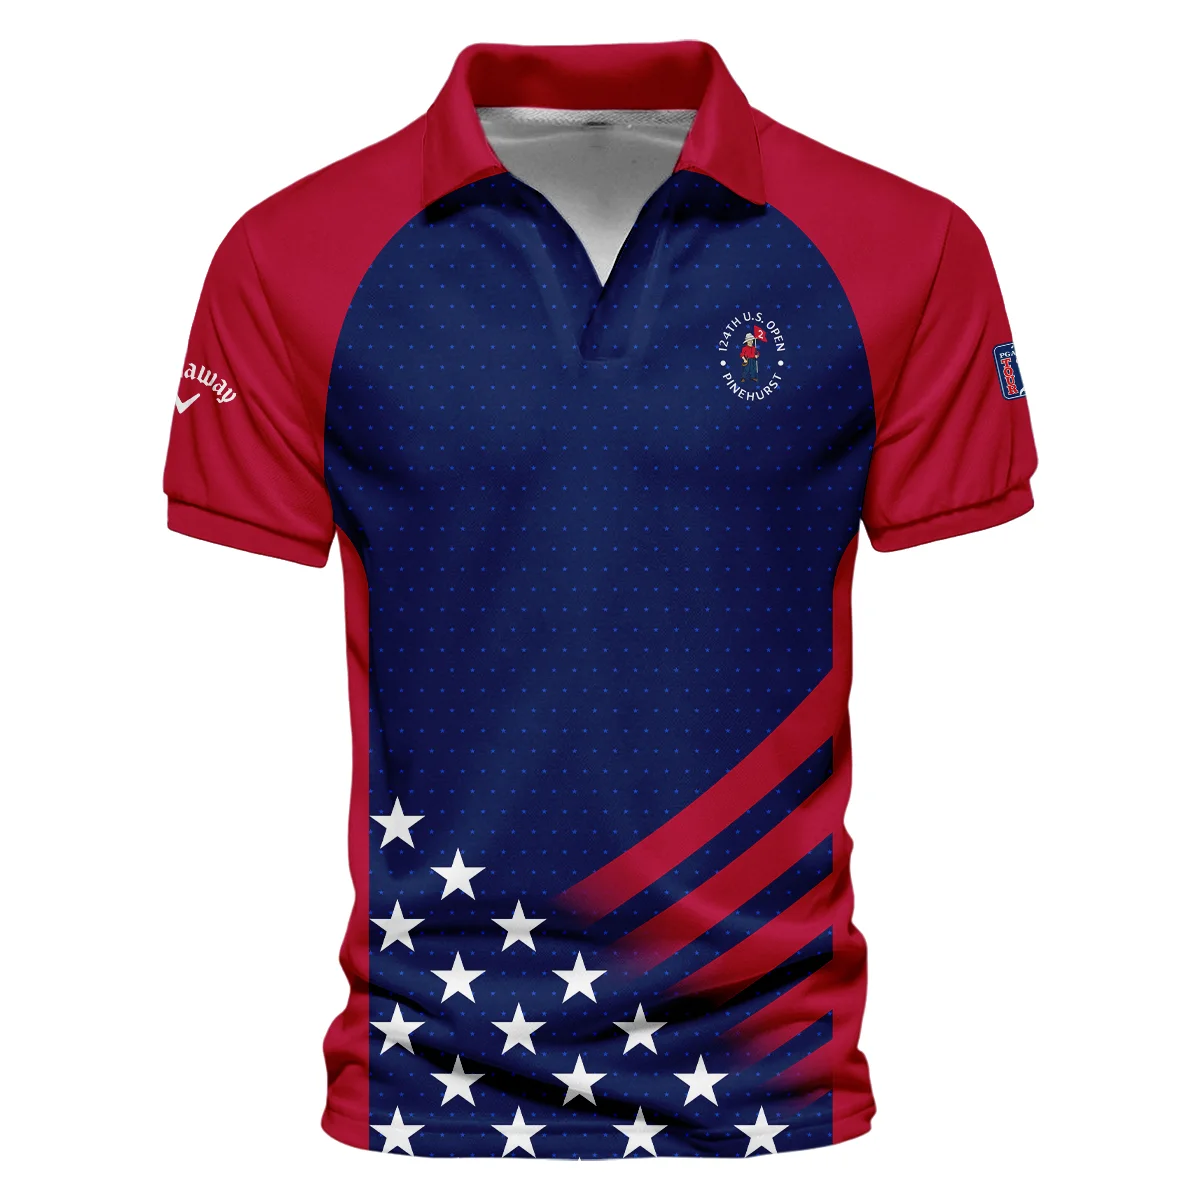 Callaway 124th U.S. Open Pinehurst Star White Dark Blue Red Background Polo Shirt Style Classic Polo Shirt For Men